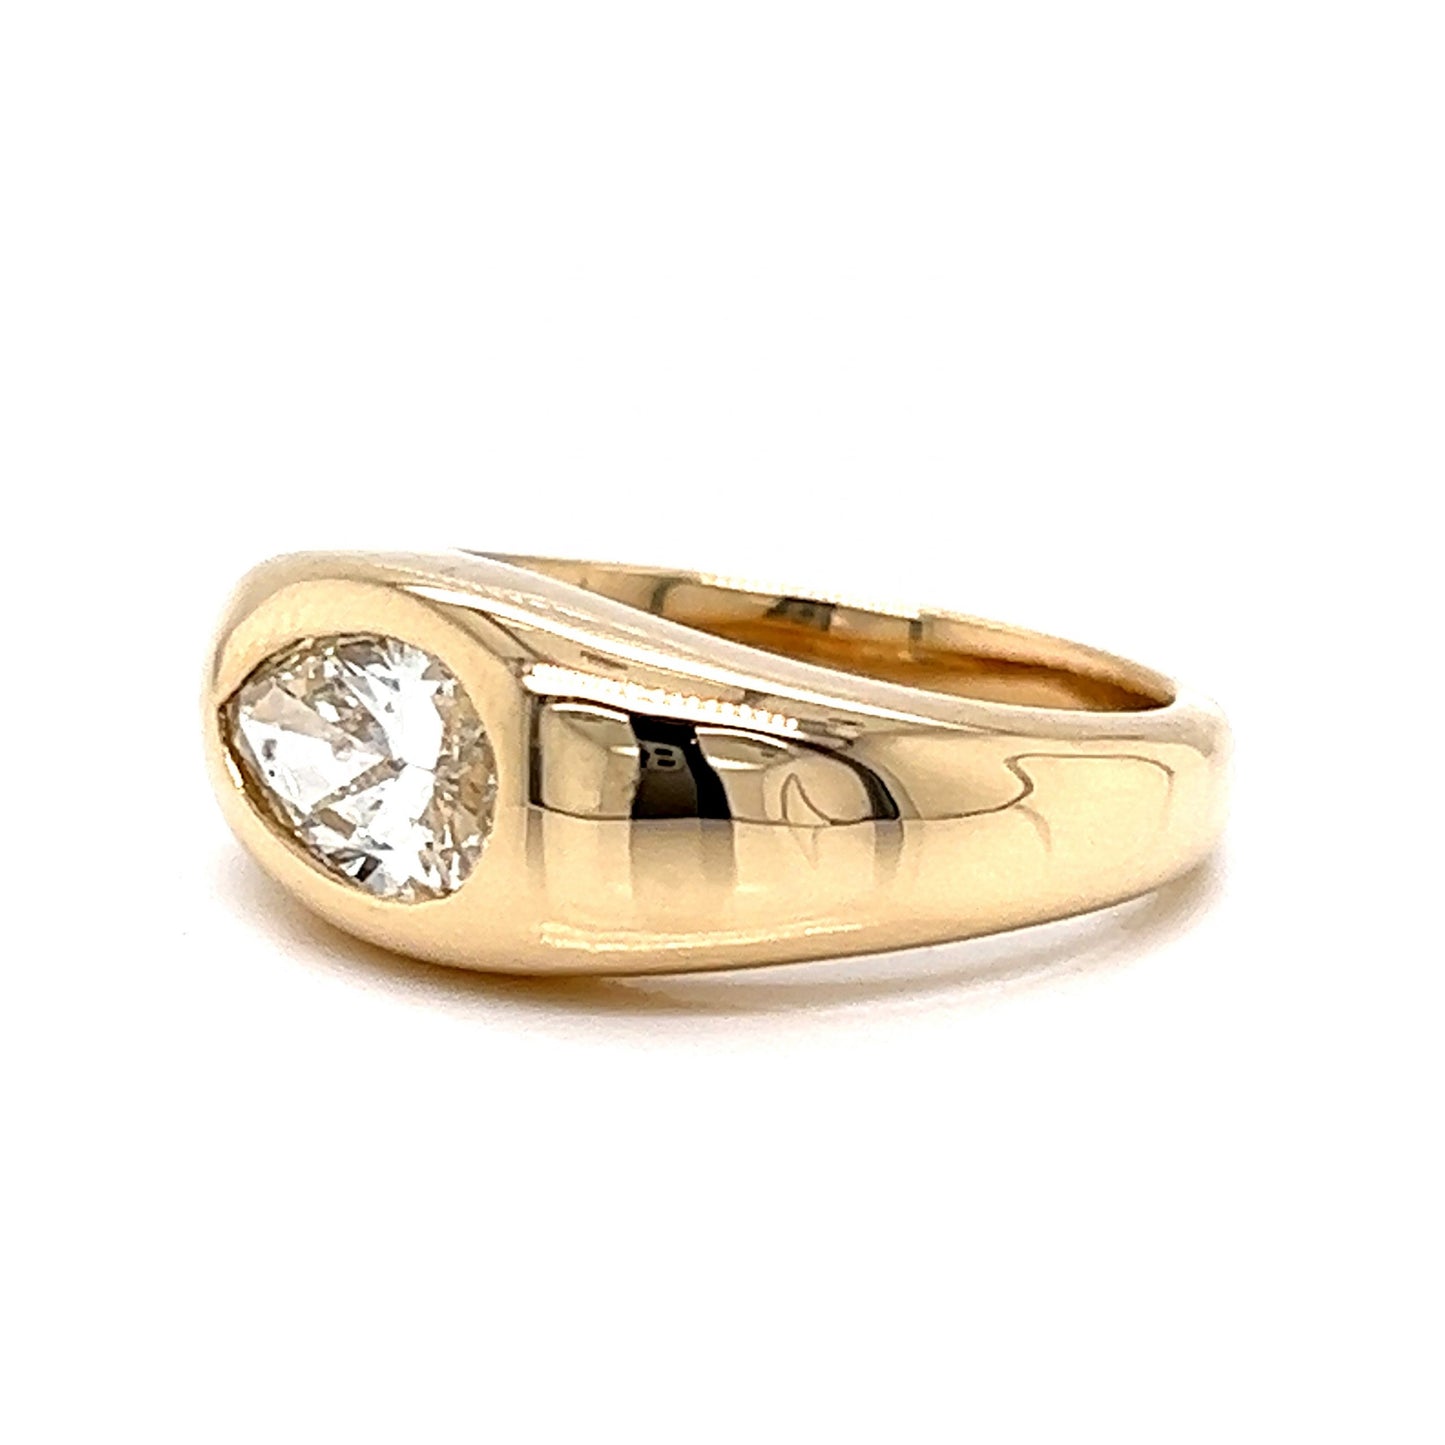 Flush Set 1.21 Pear Cut Diamond Engagement Ring in 14k Yellow Gold